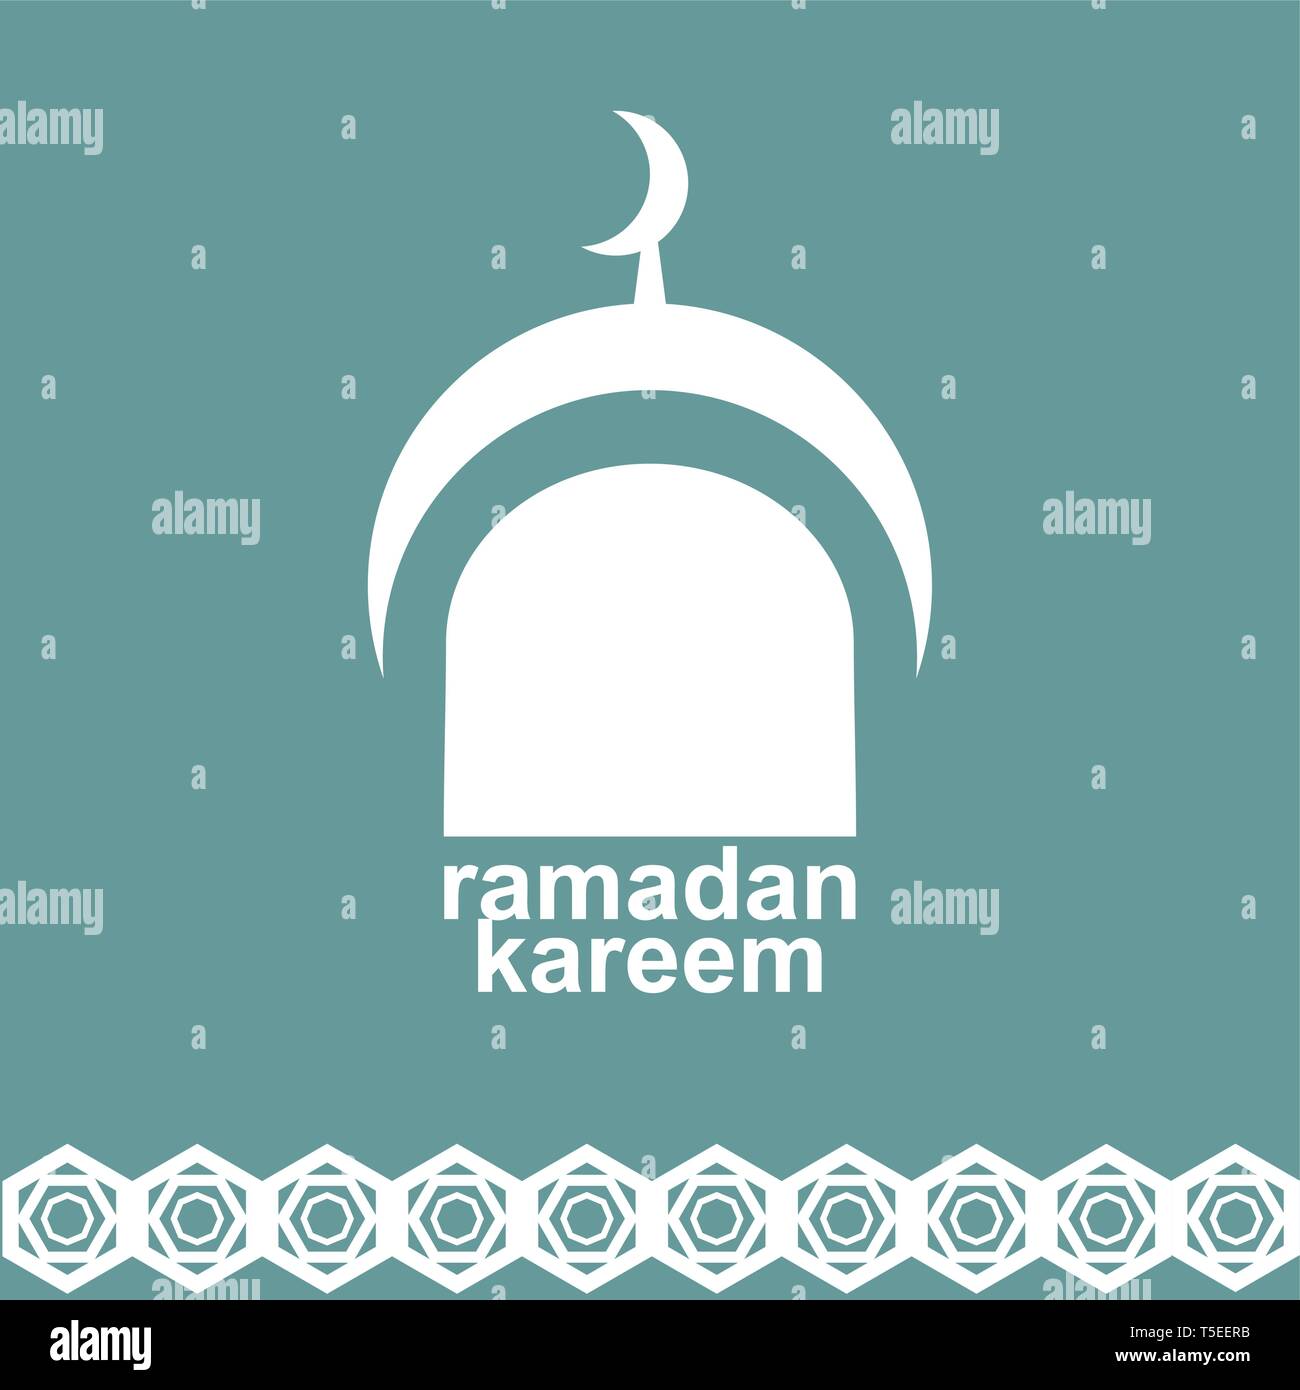 vektor of ramadan kareem Stock Vector